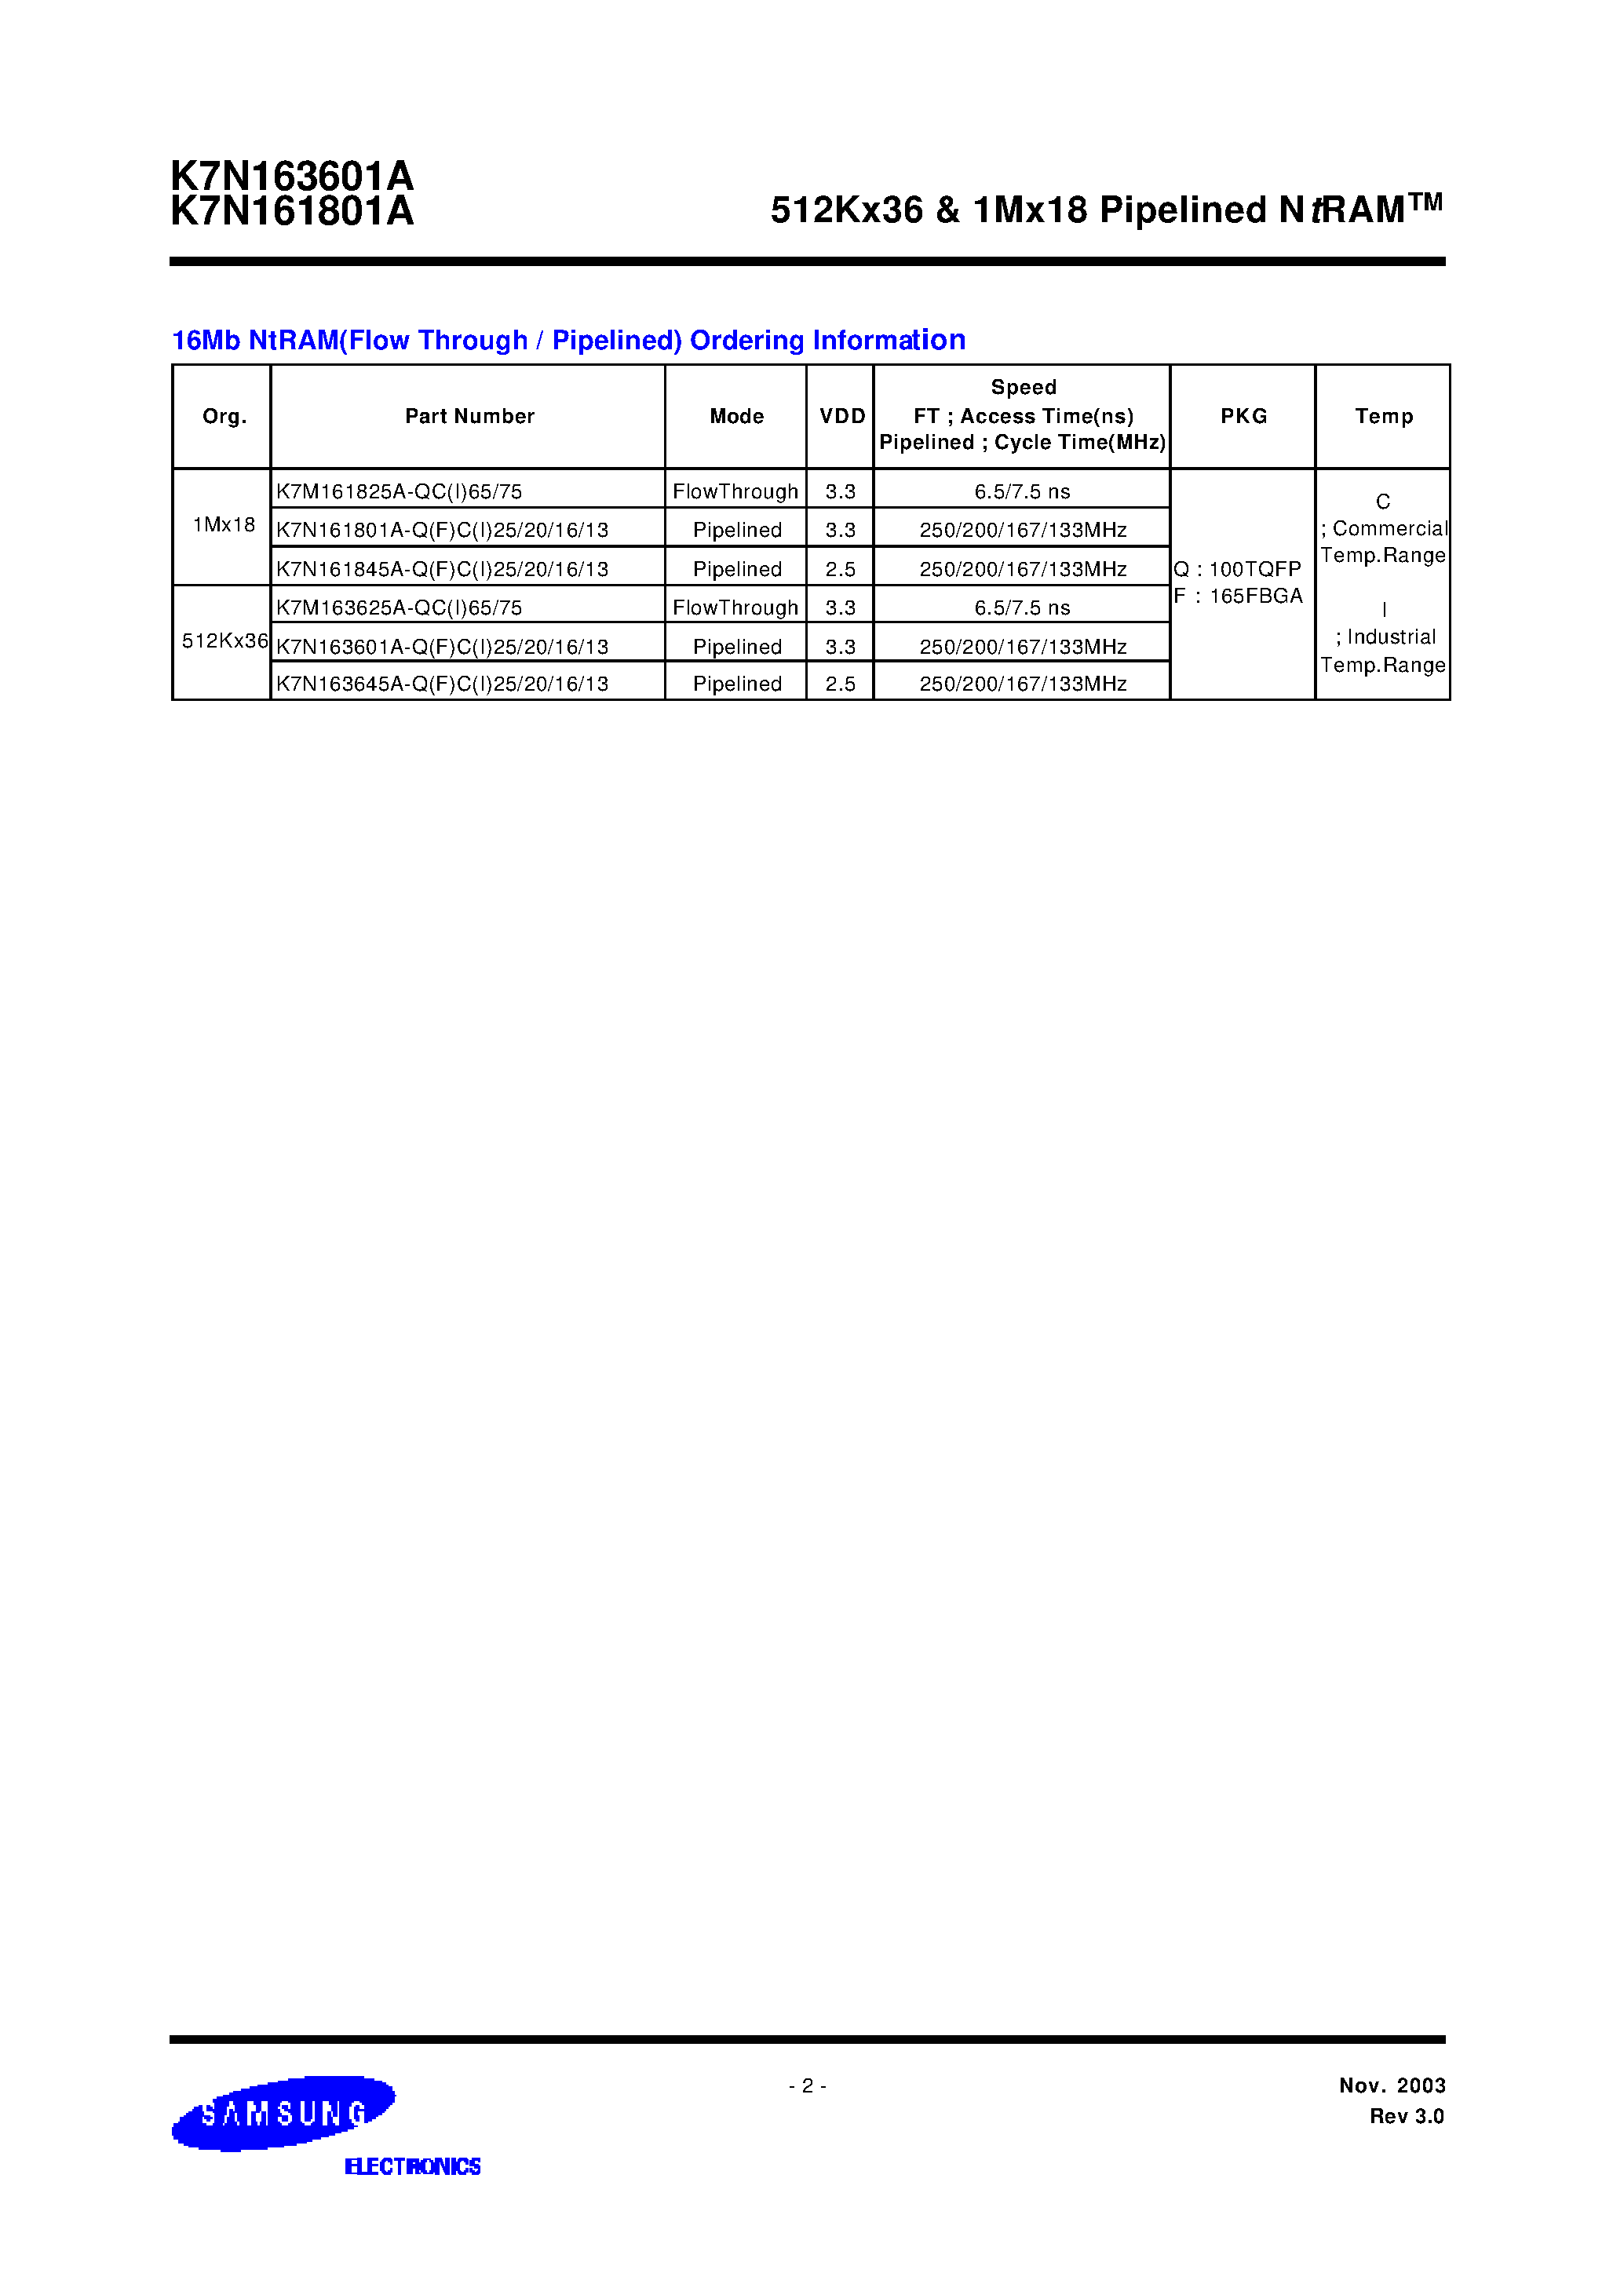 Datasheet K7N163645A-Q(F)C(I)16 - 512Kx36 & 1Mx18 Pipelined NtRAM page 2